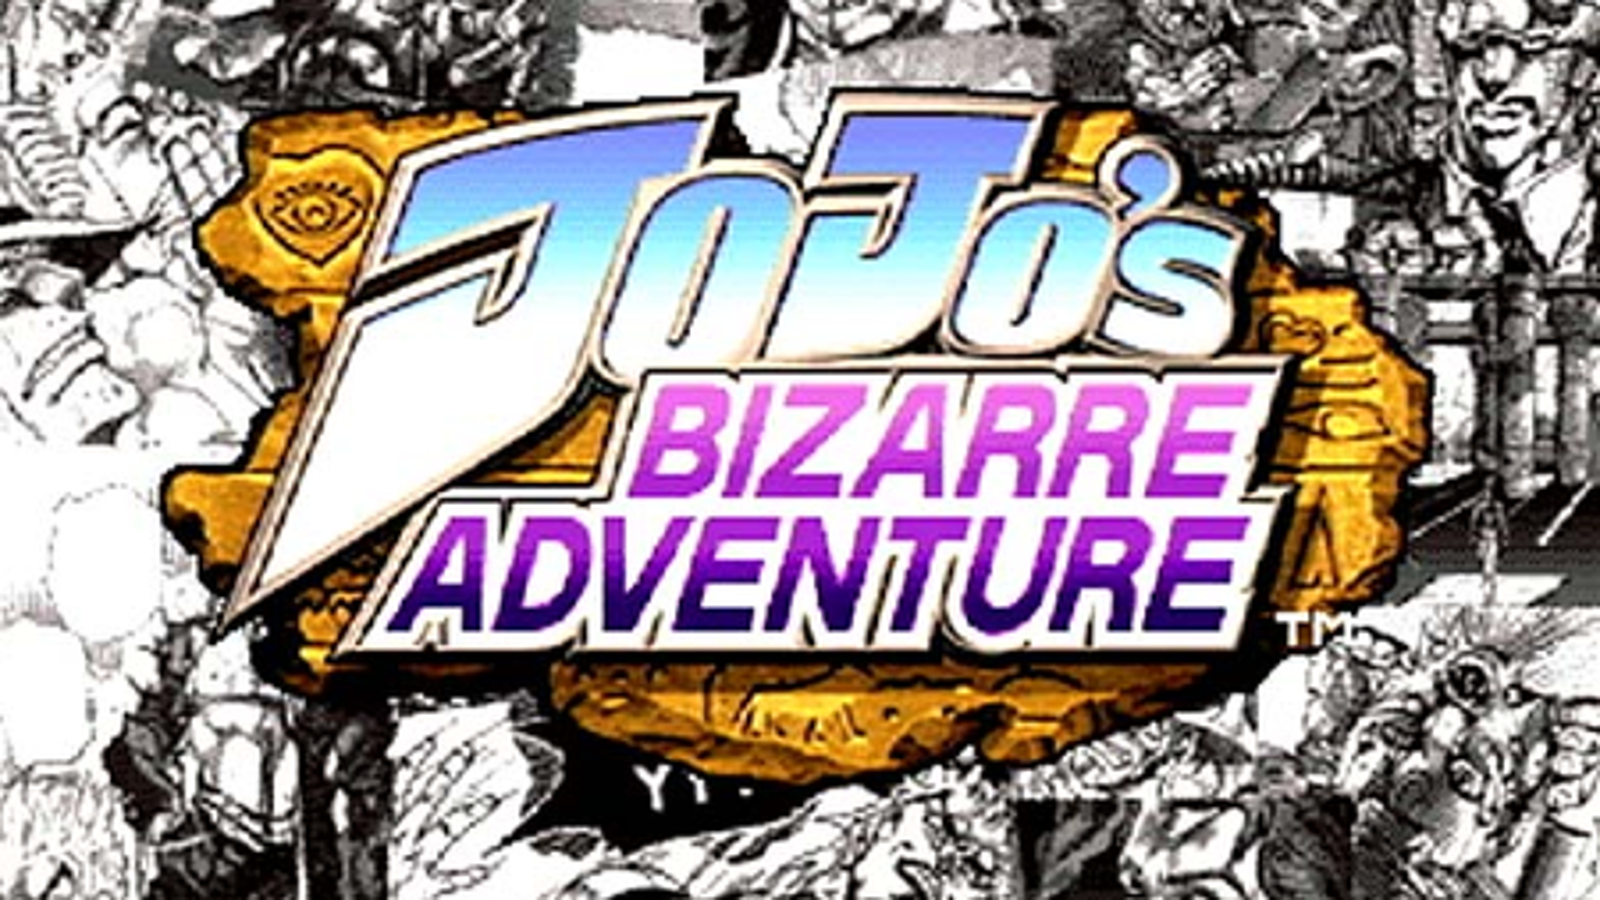 JoJo's Bizarre Adventure HD Ver. (Xbox Live Arcade) Story as